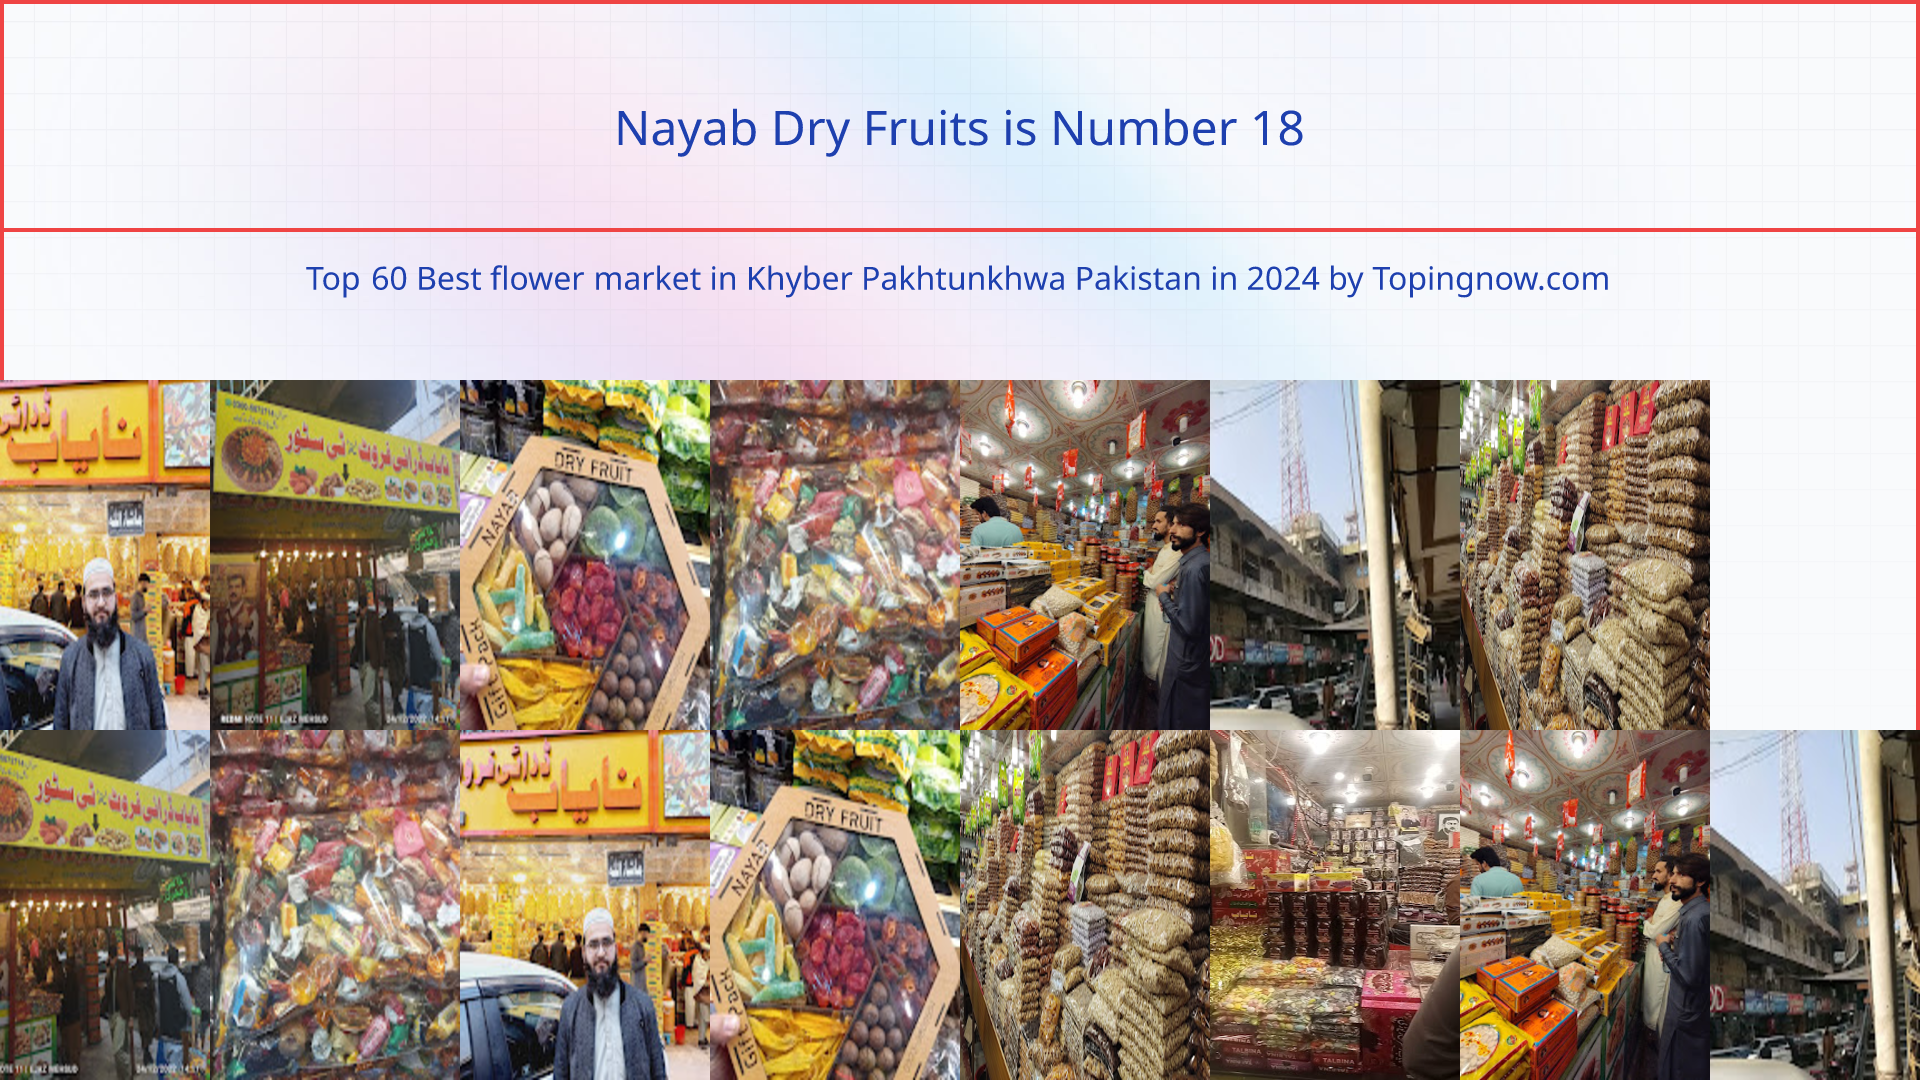 Nayab Dry Fruits: Top 60 Best flower market in Khyber Pakhtunkhwa Pakistan in 2024